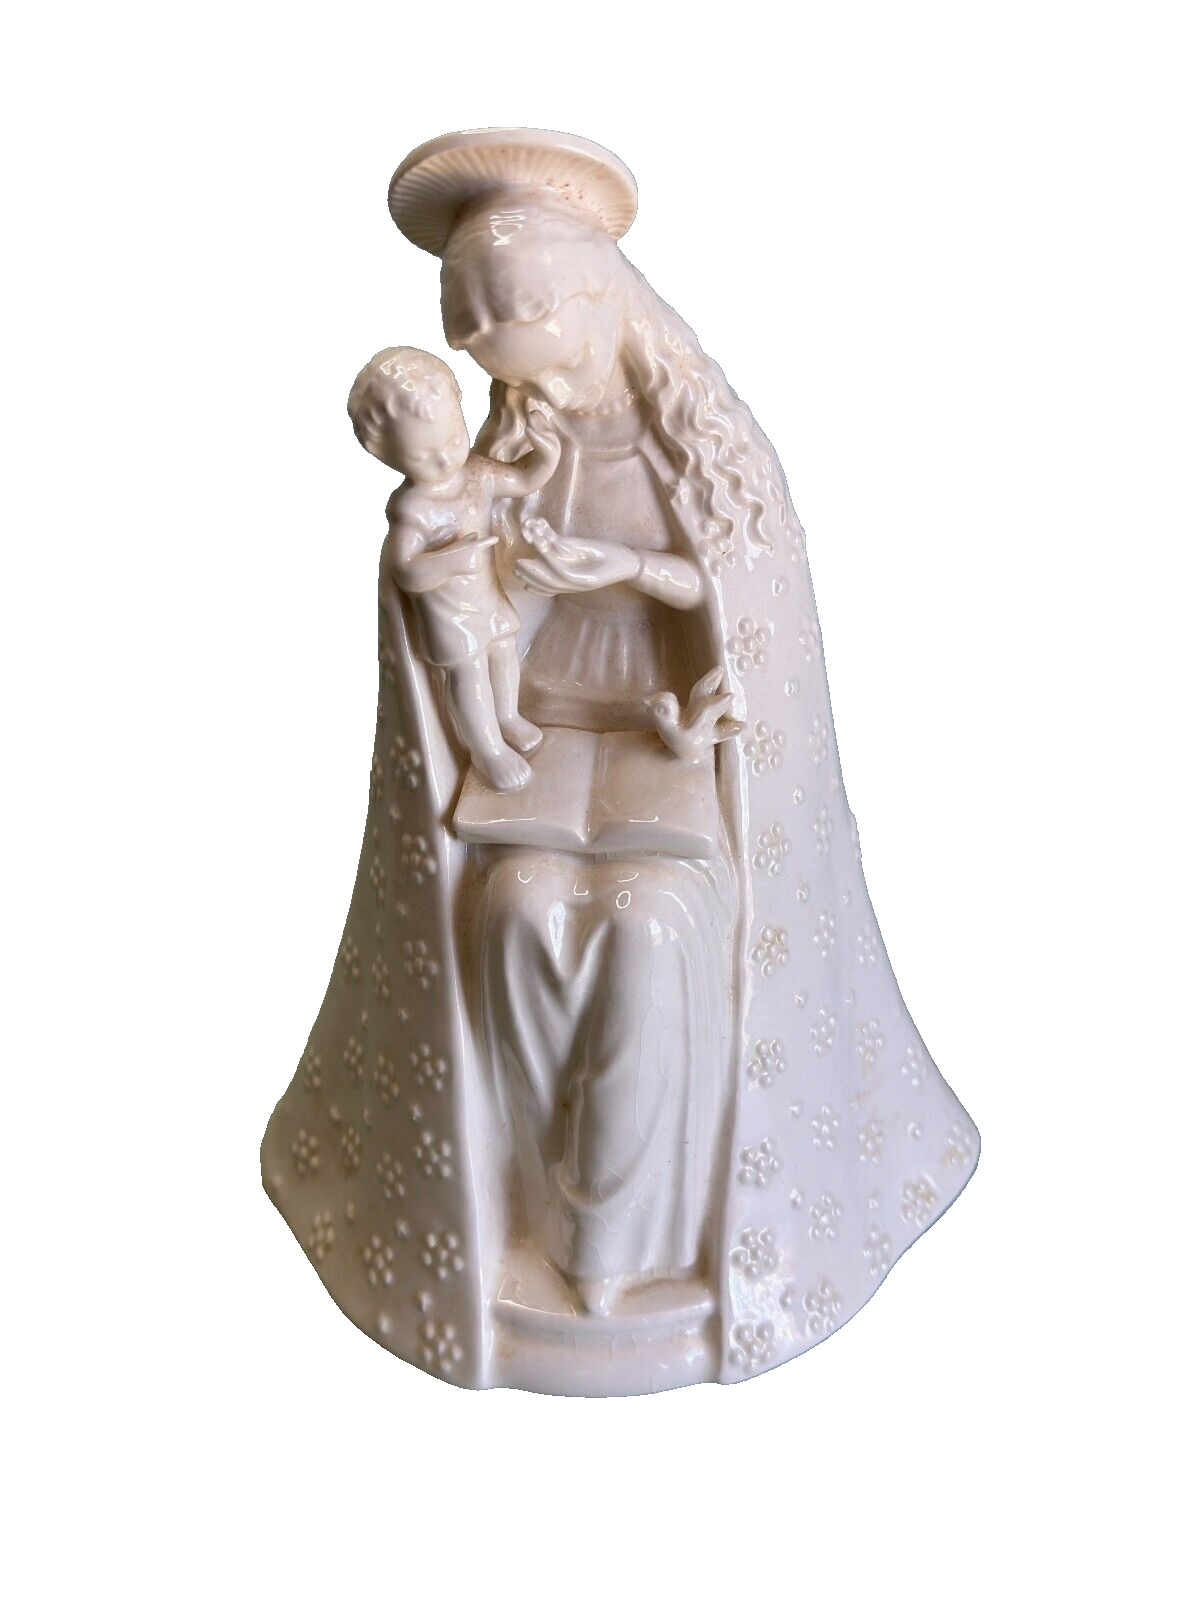 Hummel Goebel 'Sitting Flower Madonna' Figurine With Toddler Jesus C1956